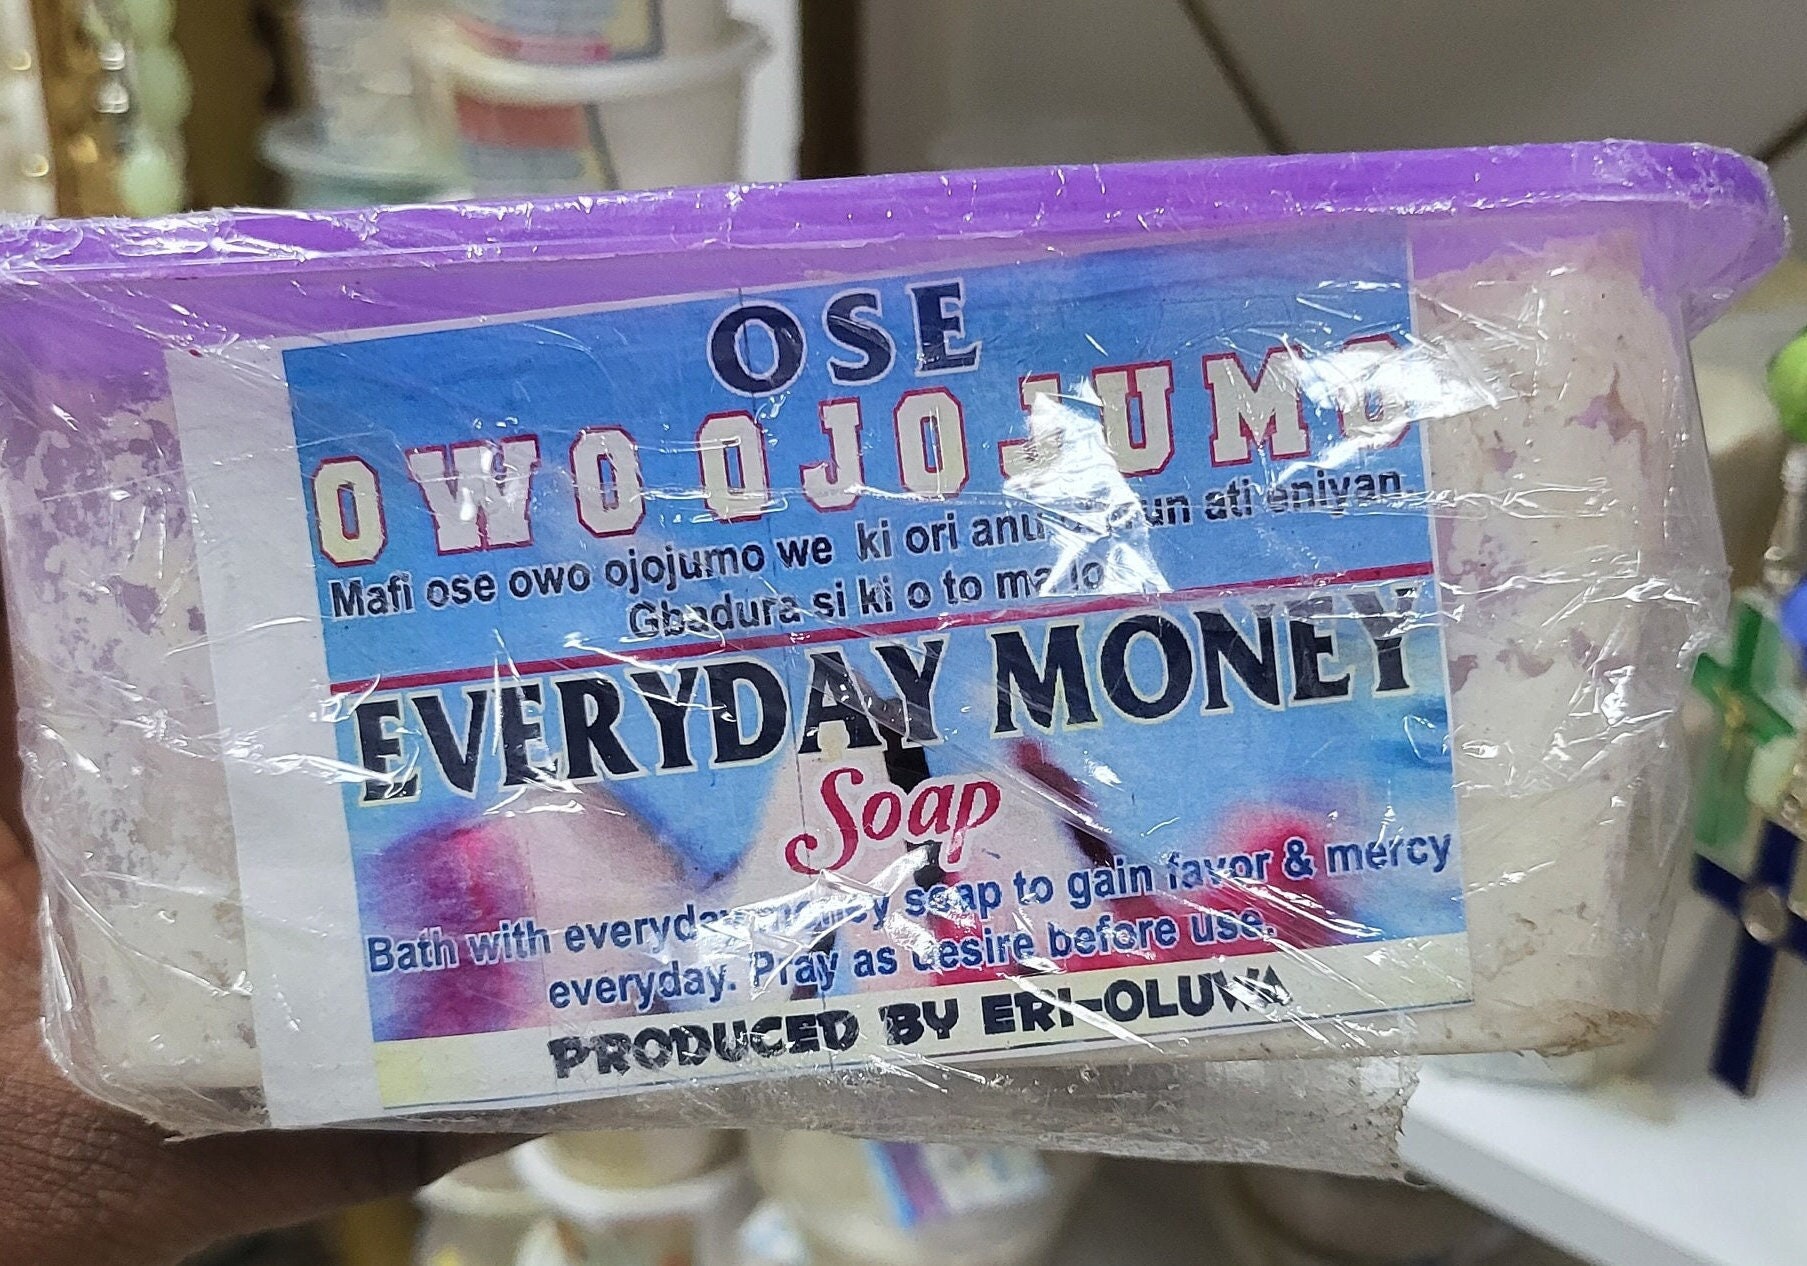 Money Soap Prosperity Soap 